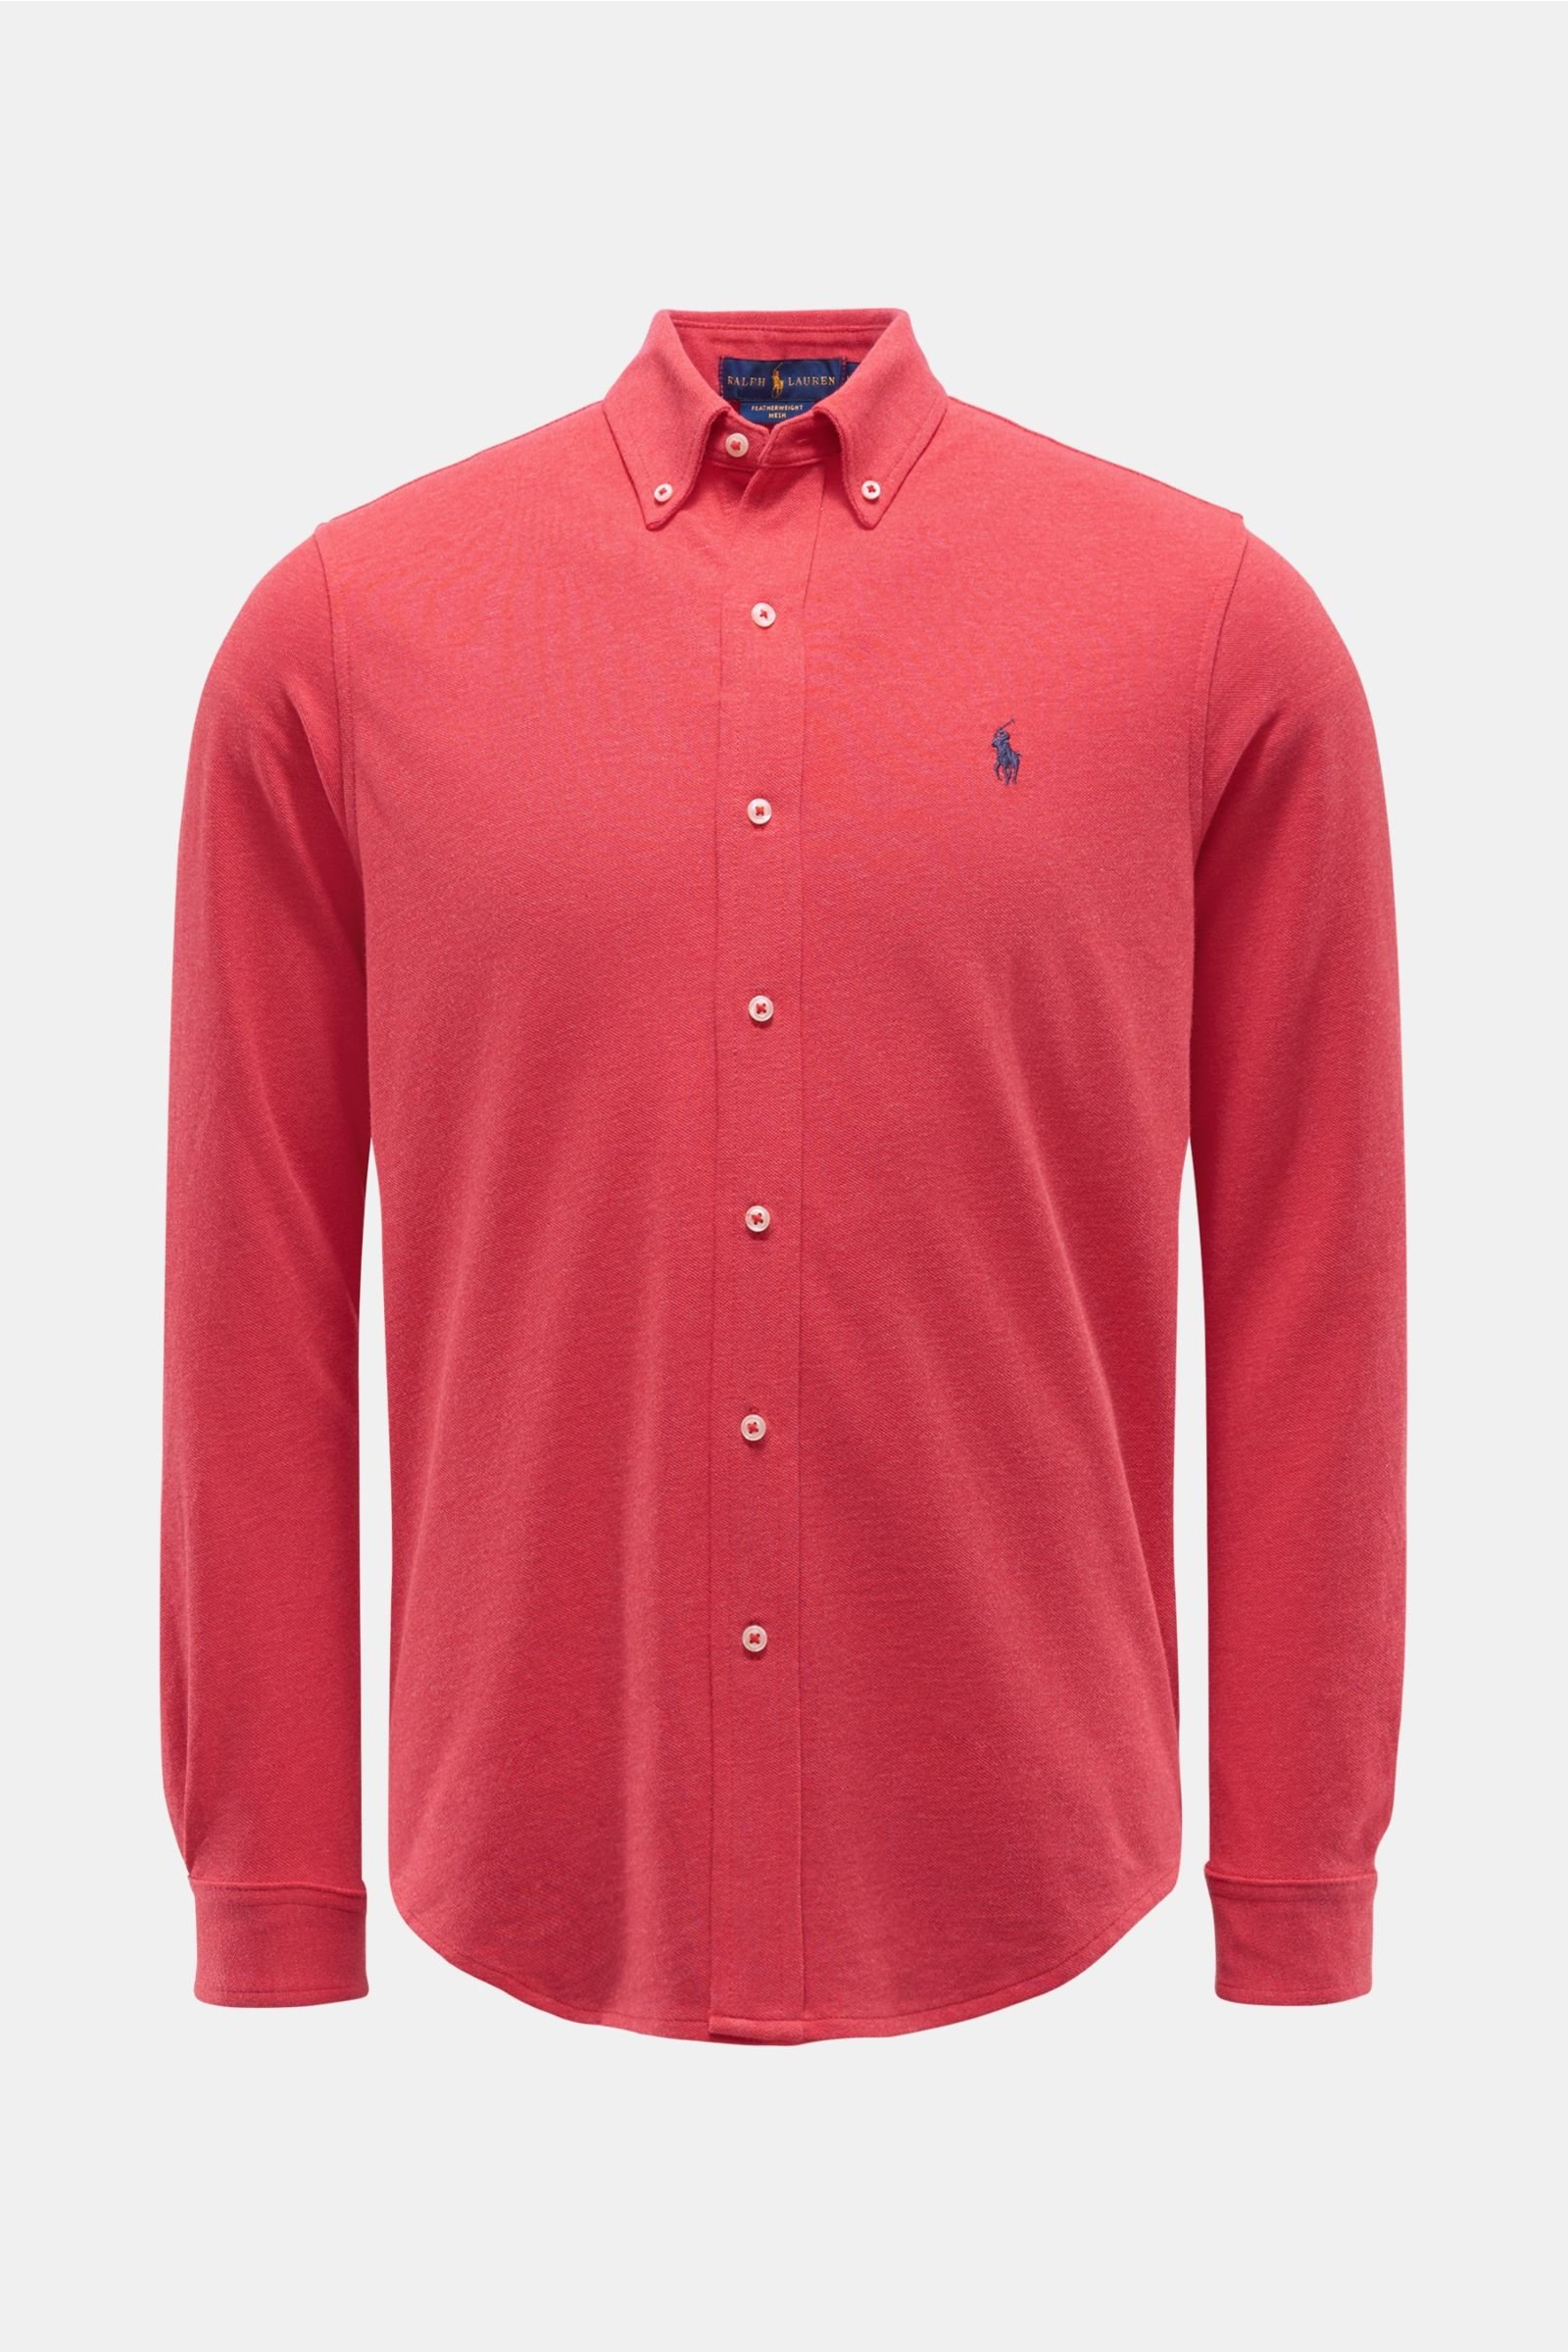 Jersey shirt button-down collar coral